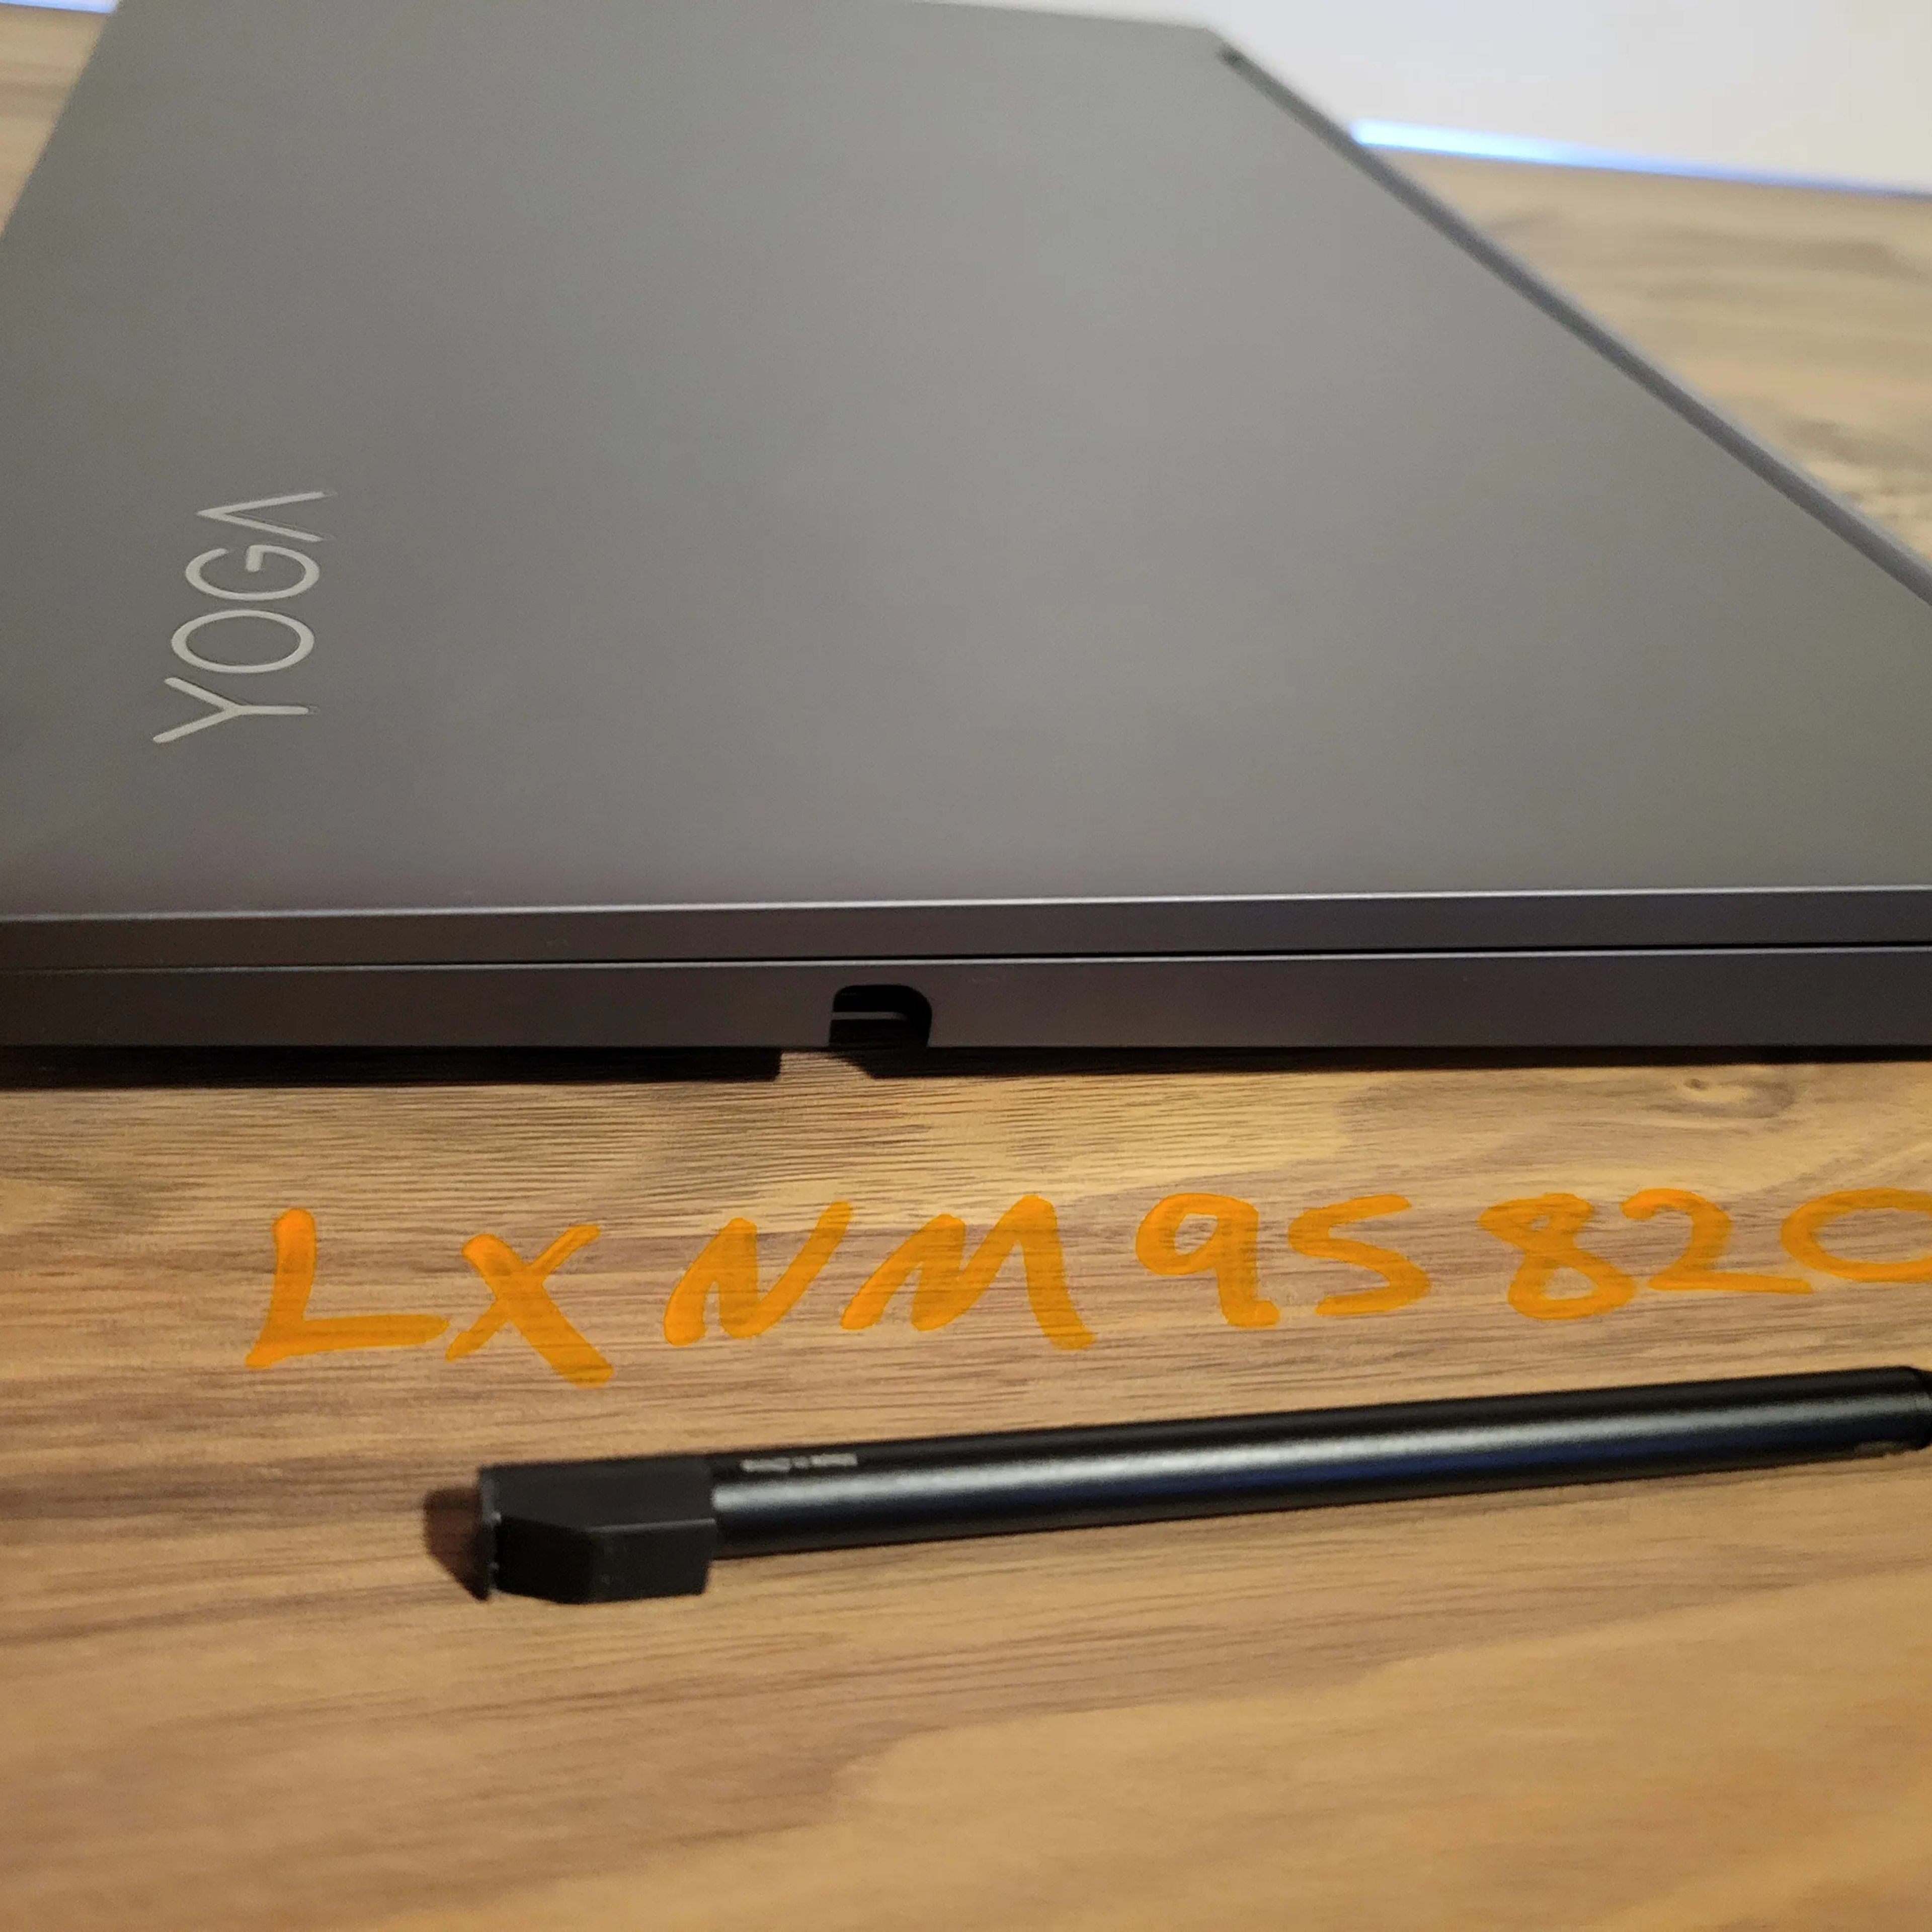 Lenovo Yoga 9 Touchscreen 15.6" laptop - Model 15imlh5